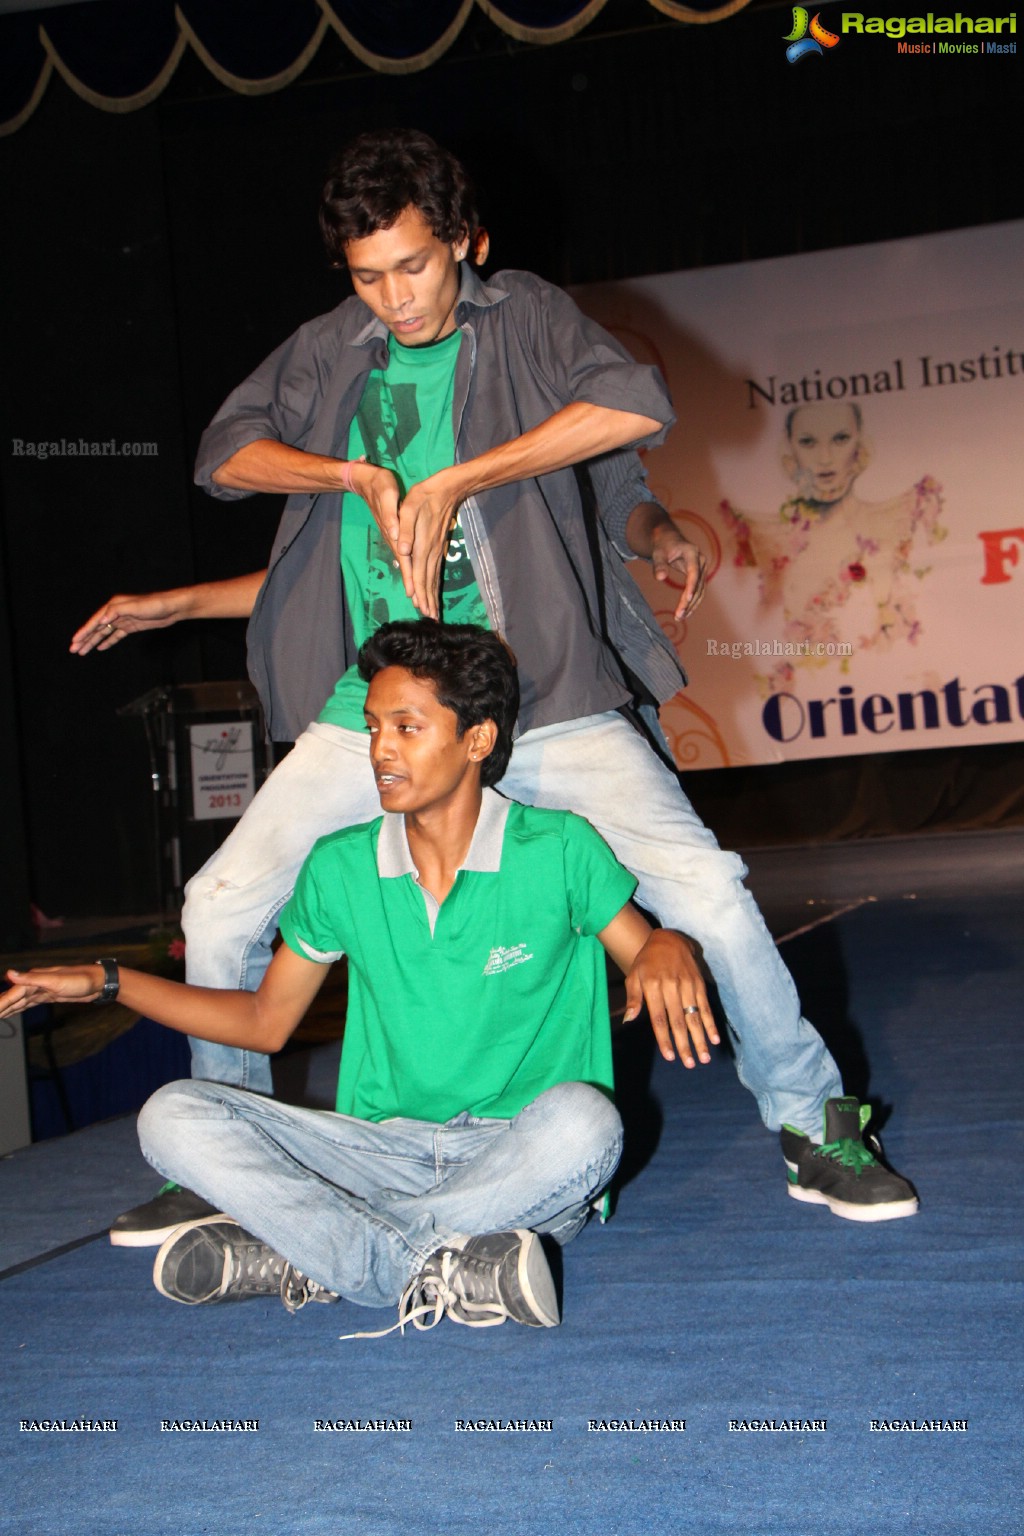 NIFT Hyderabad Freshers Orientation Program 2013